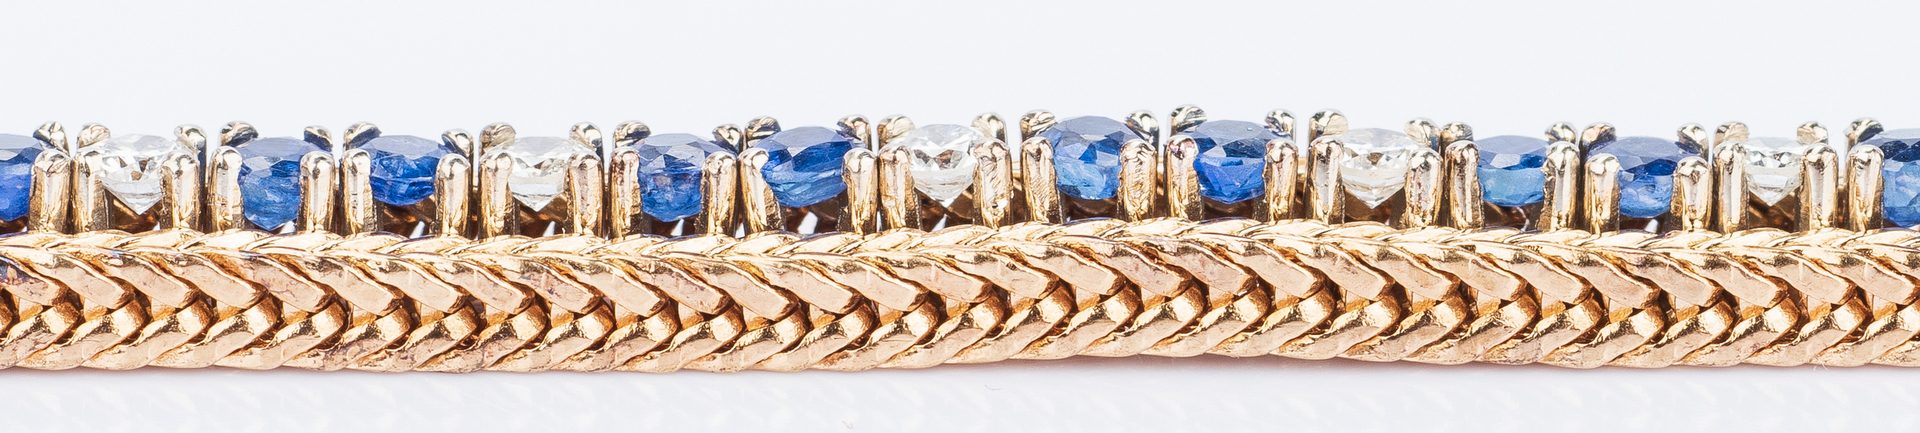 Lot 194: 14K Sapphire & Diamond Line Bracelet